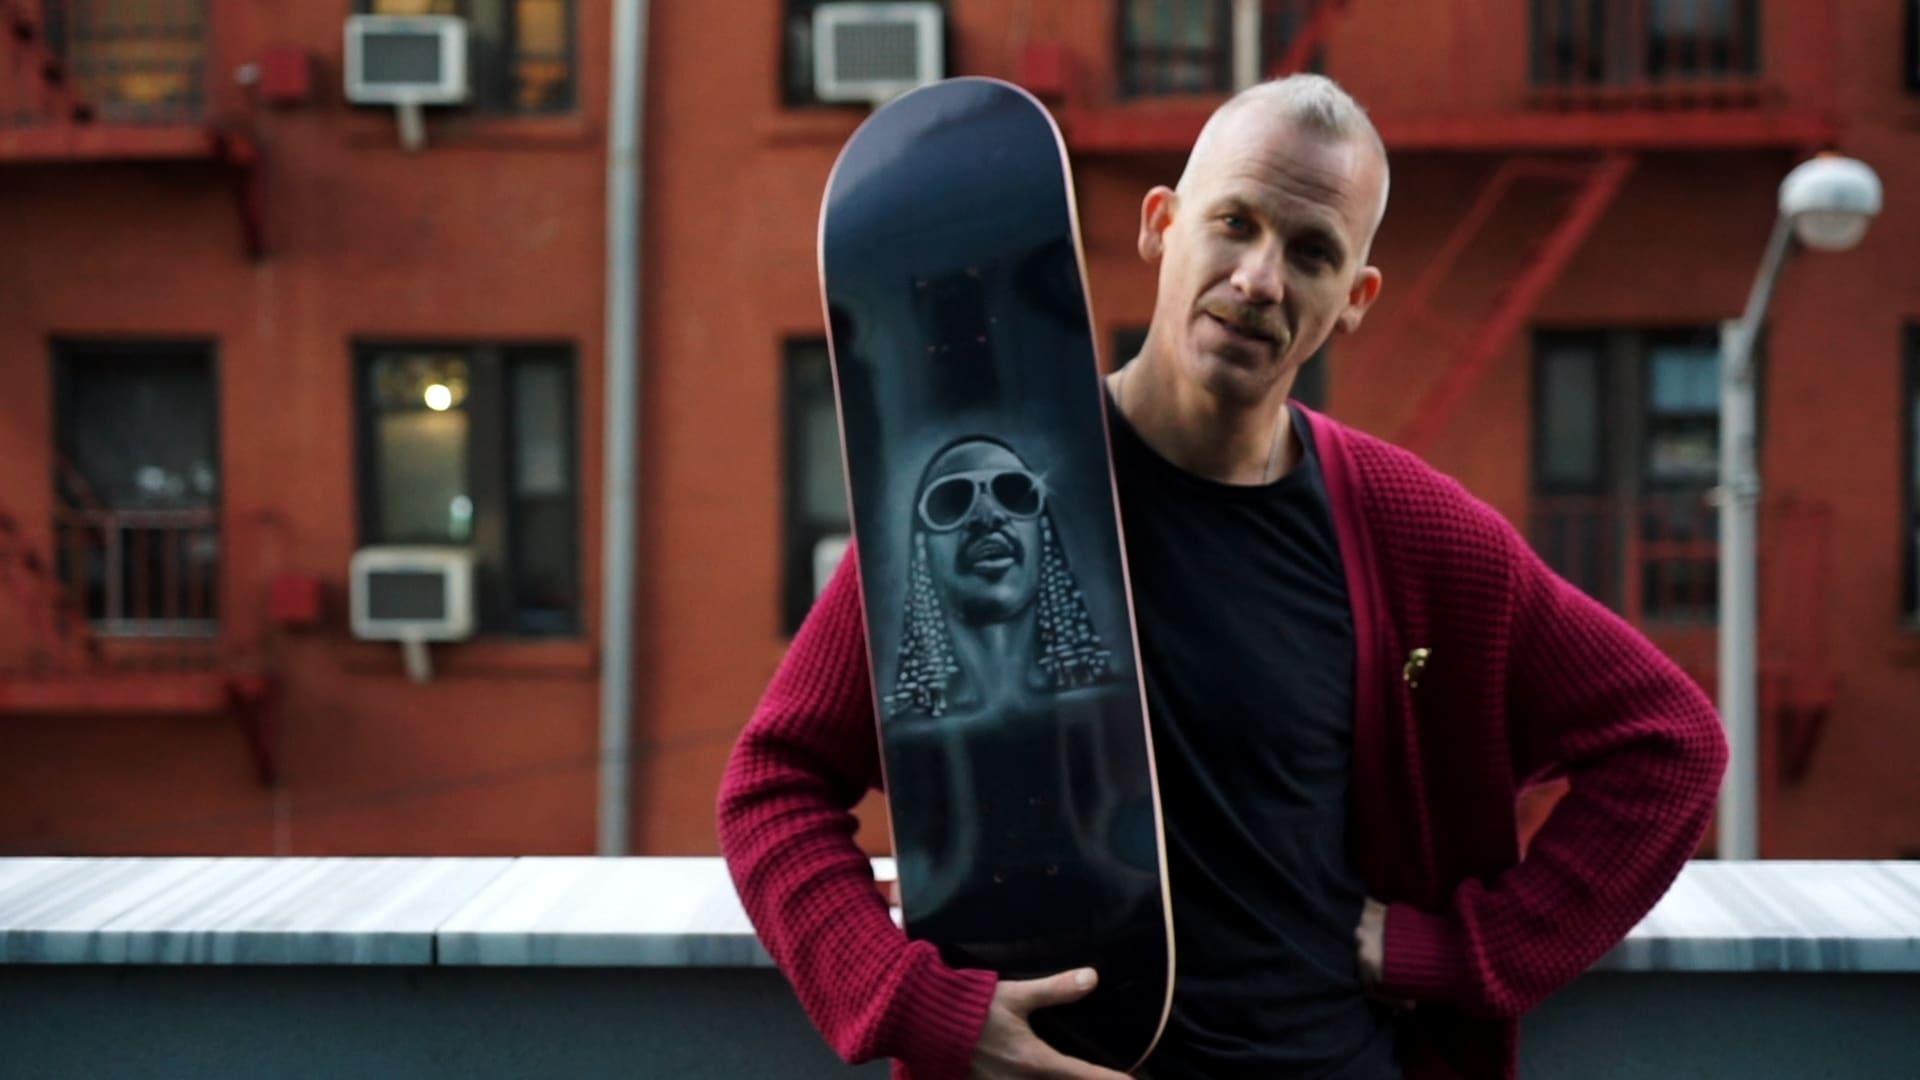 Best of Bobshirt: A Skateboarding Documentary backdrop